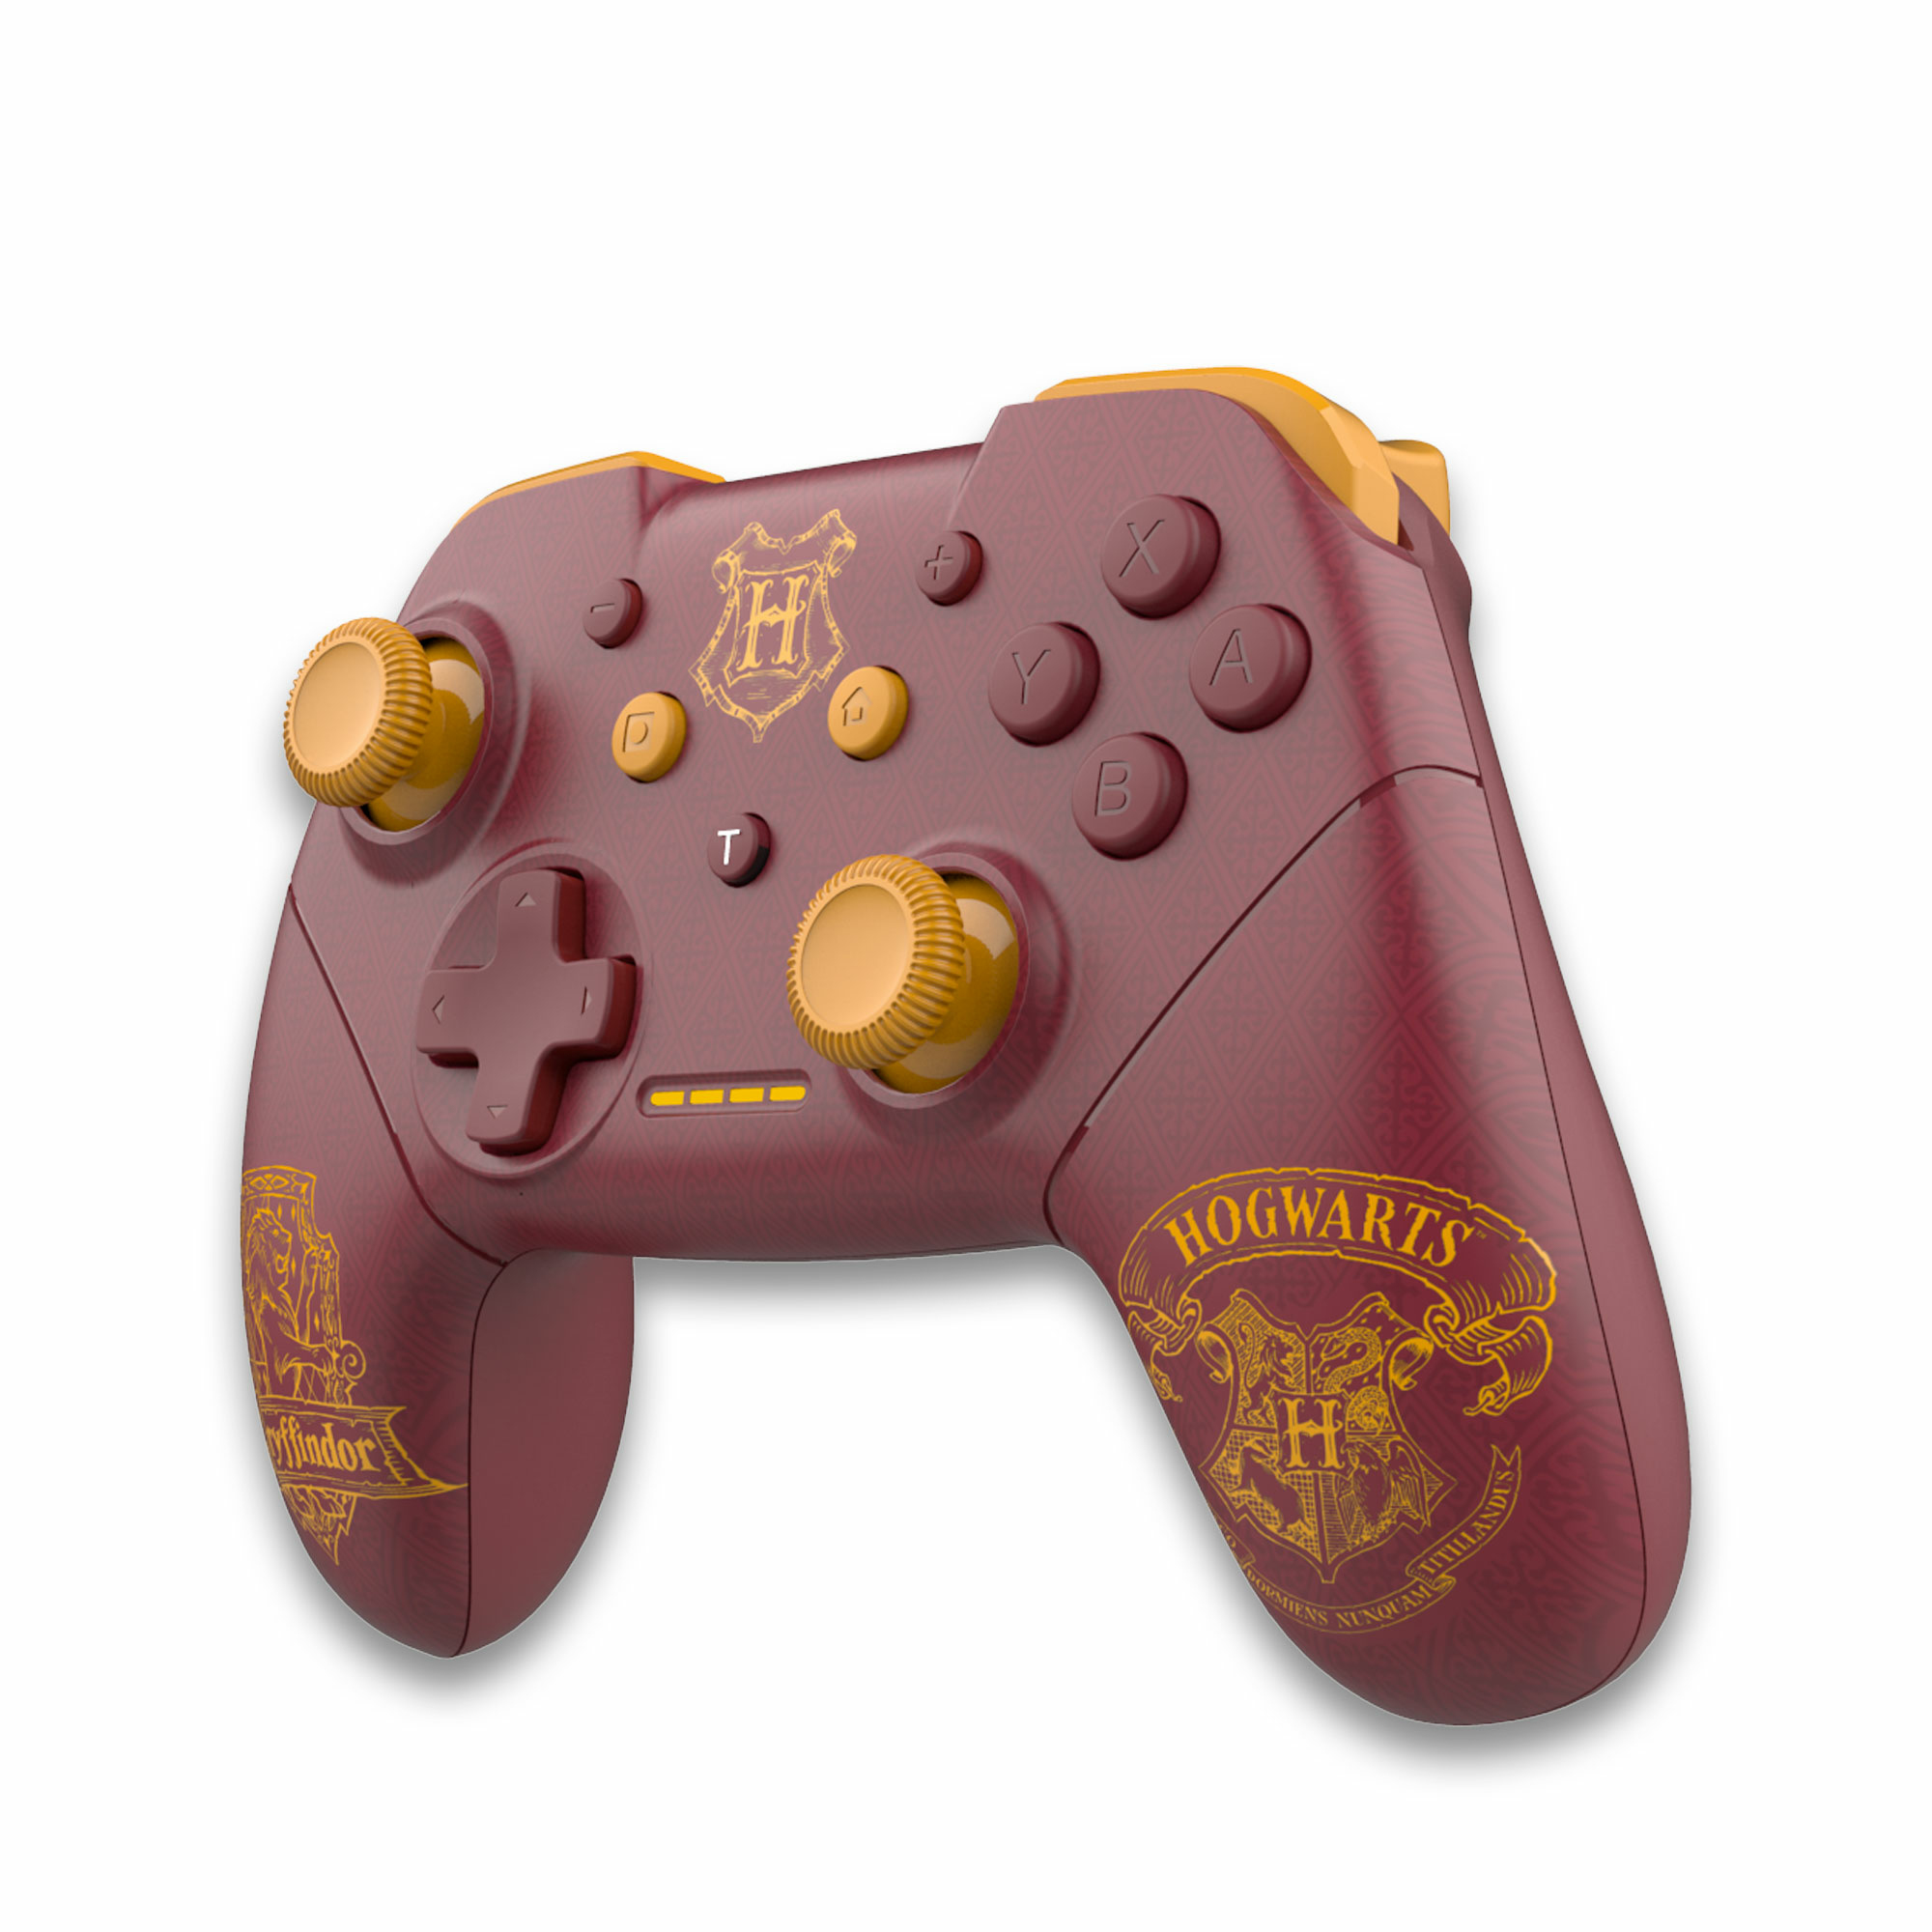 Manette PS4 Bluetooth Harry Potter Gryffondor Rouge lumineuse 3.5